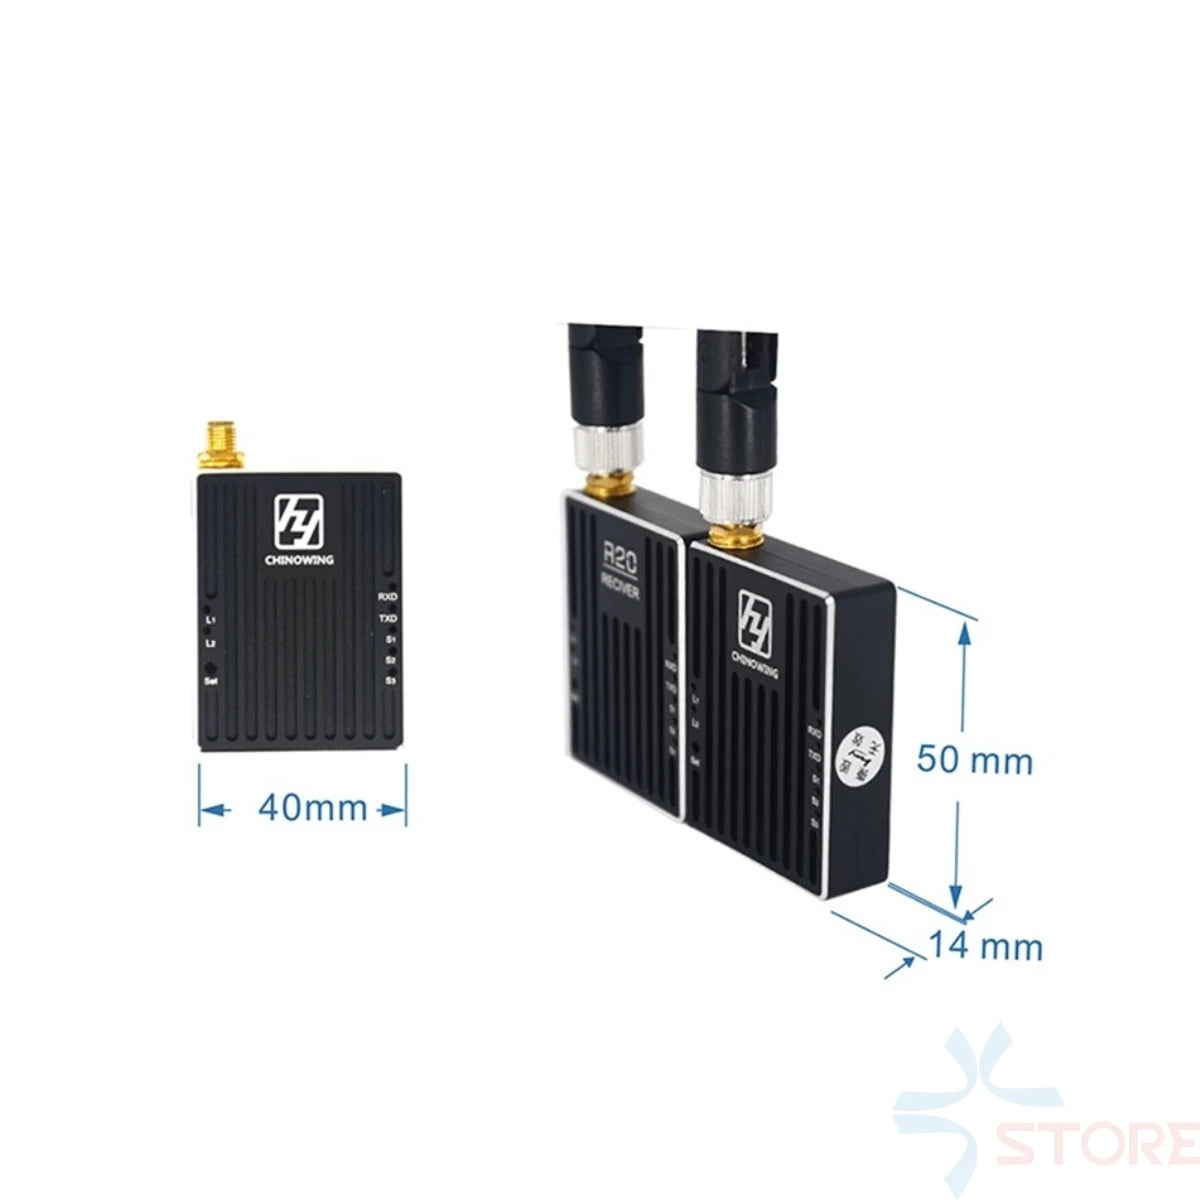 R20 820-845Mhz 100mw-1W VTX - Over 30Km adjustable wireless data link Digital Video Downlink System